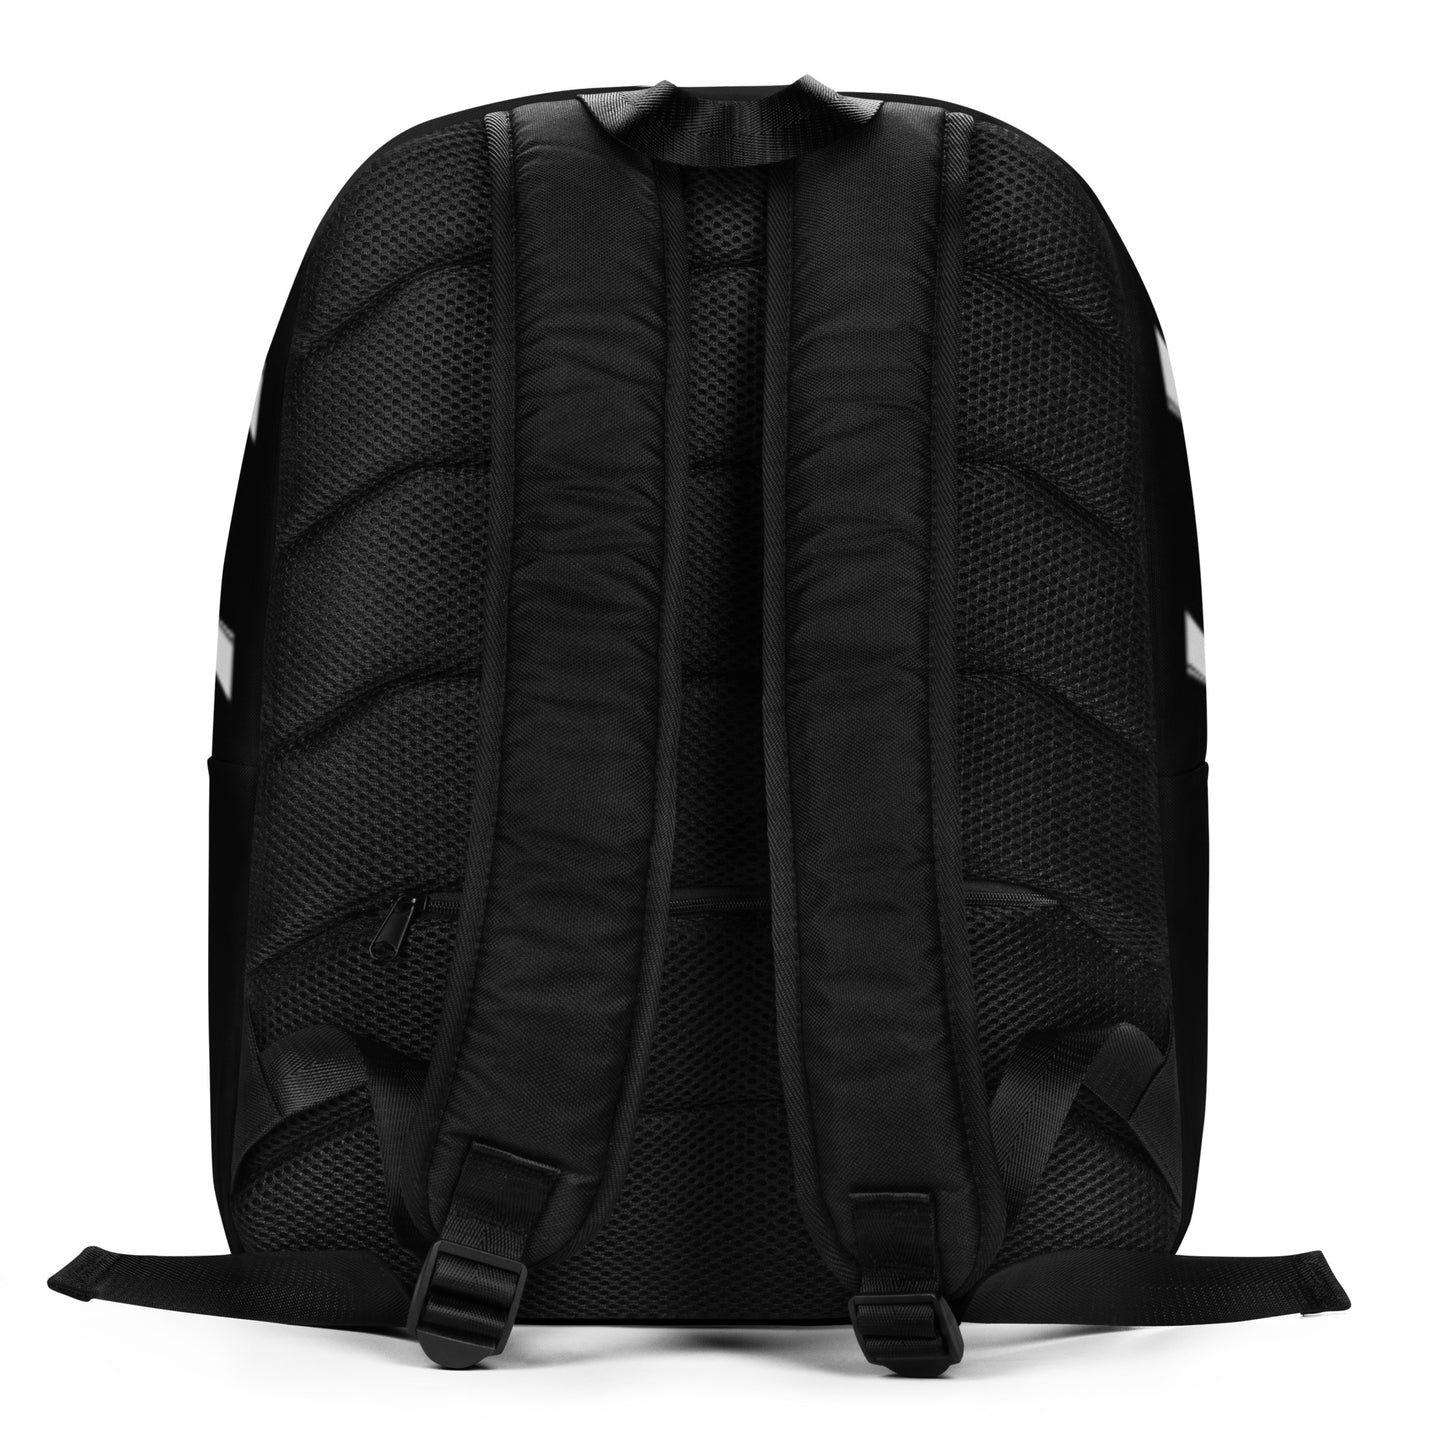 SVOLTA Lightning Bolt Minimalist Backpack in Black and White